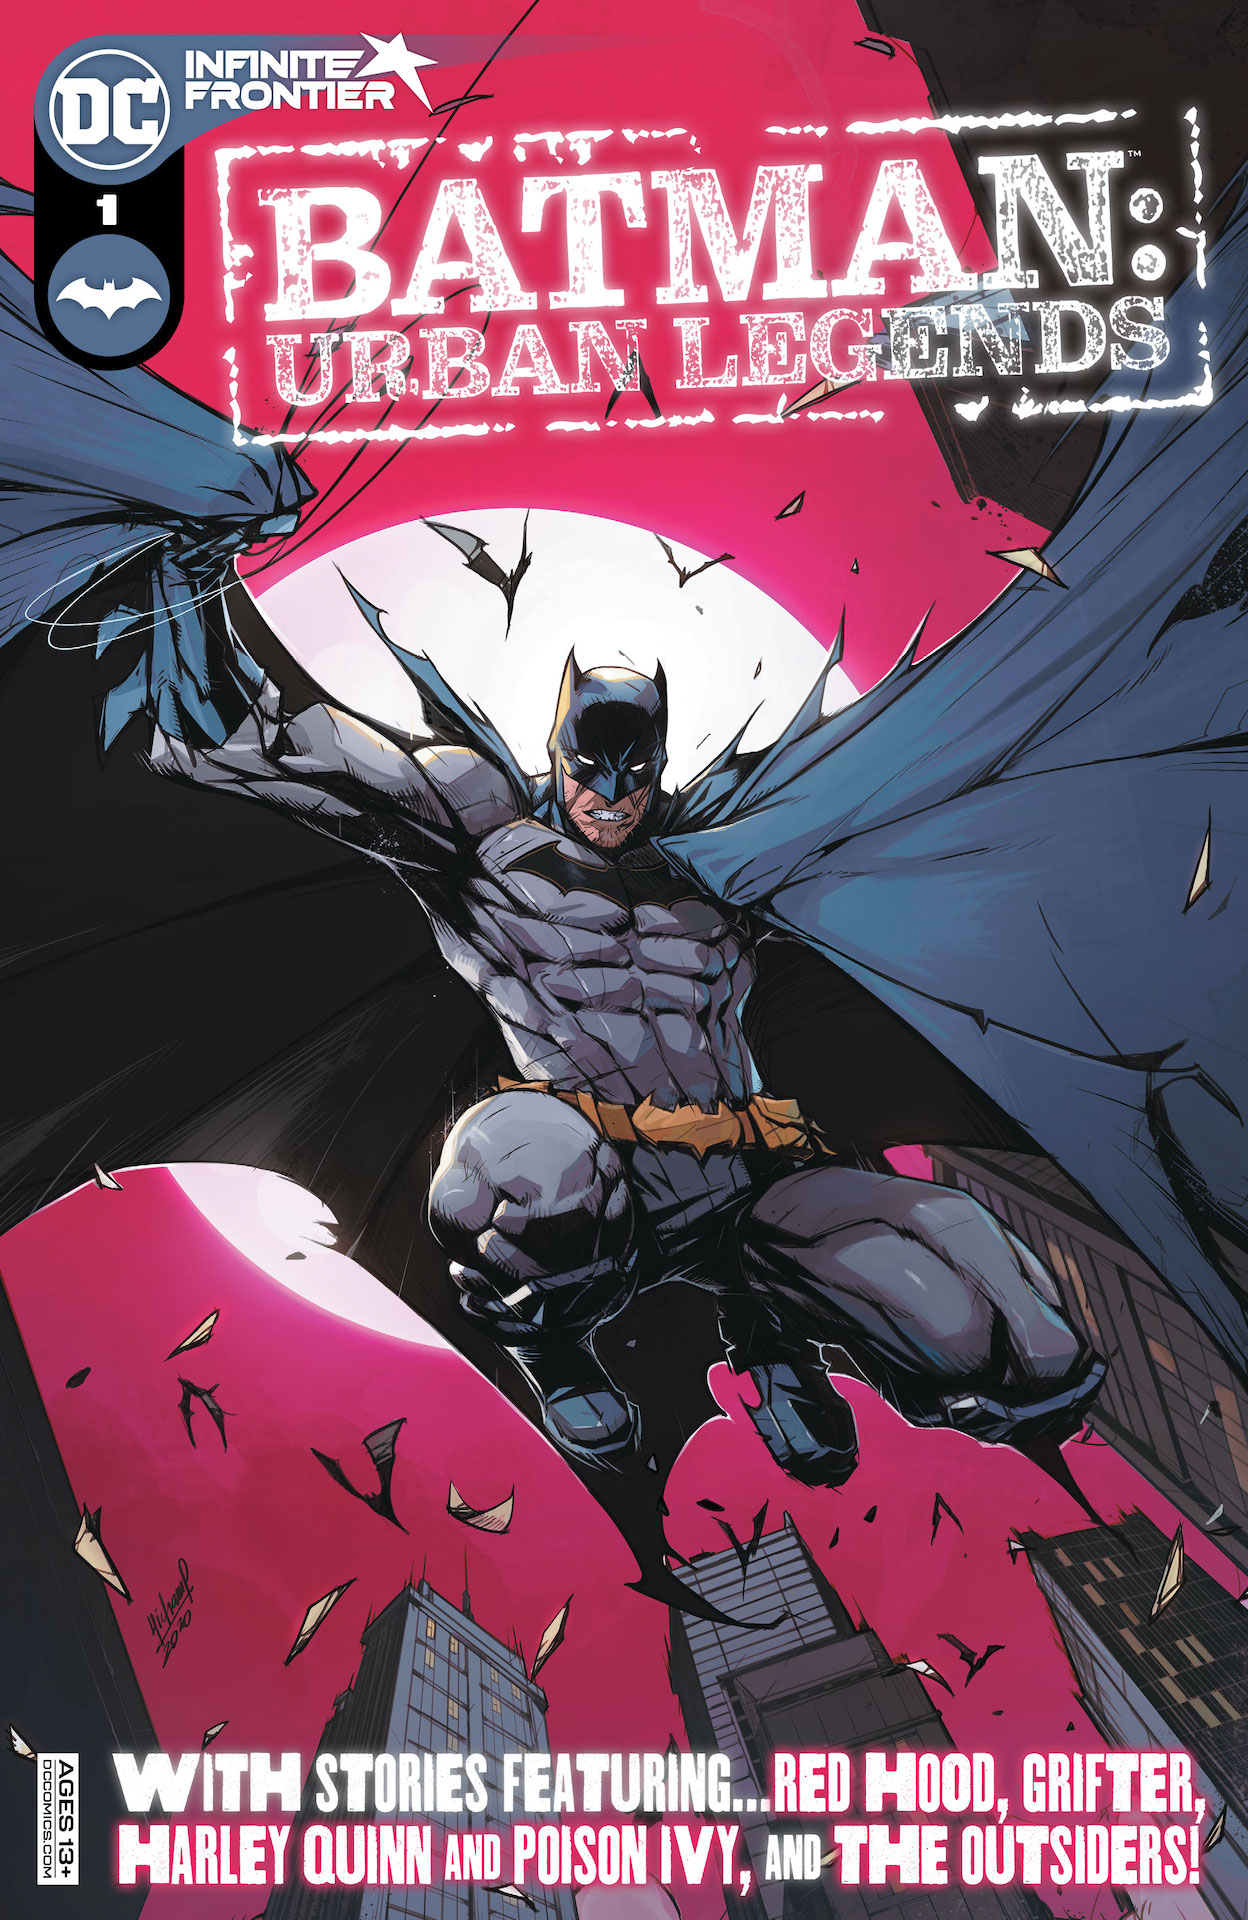 Batman: Urban Legends #1 preview